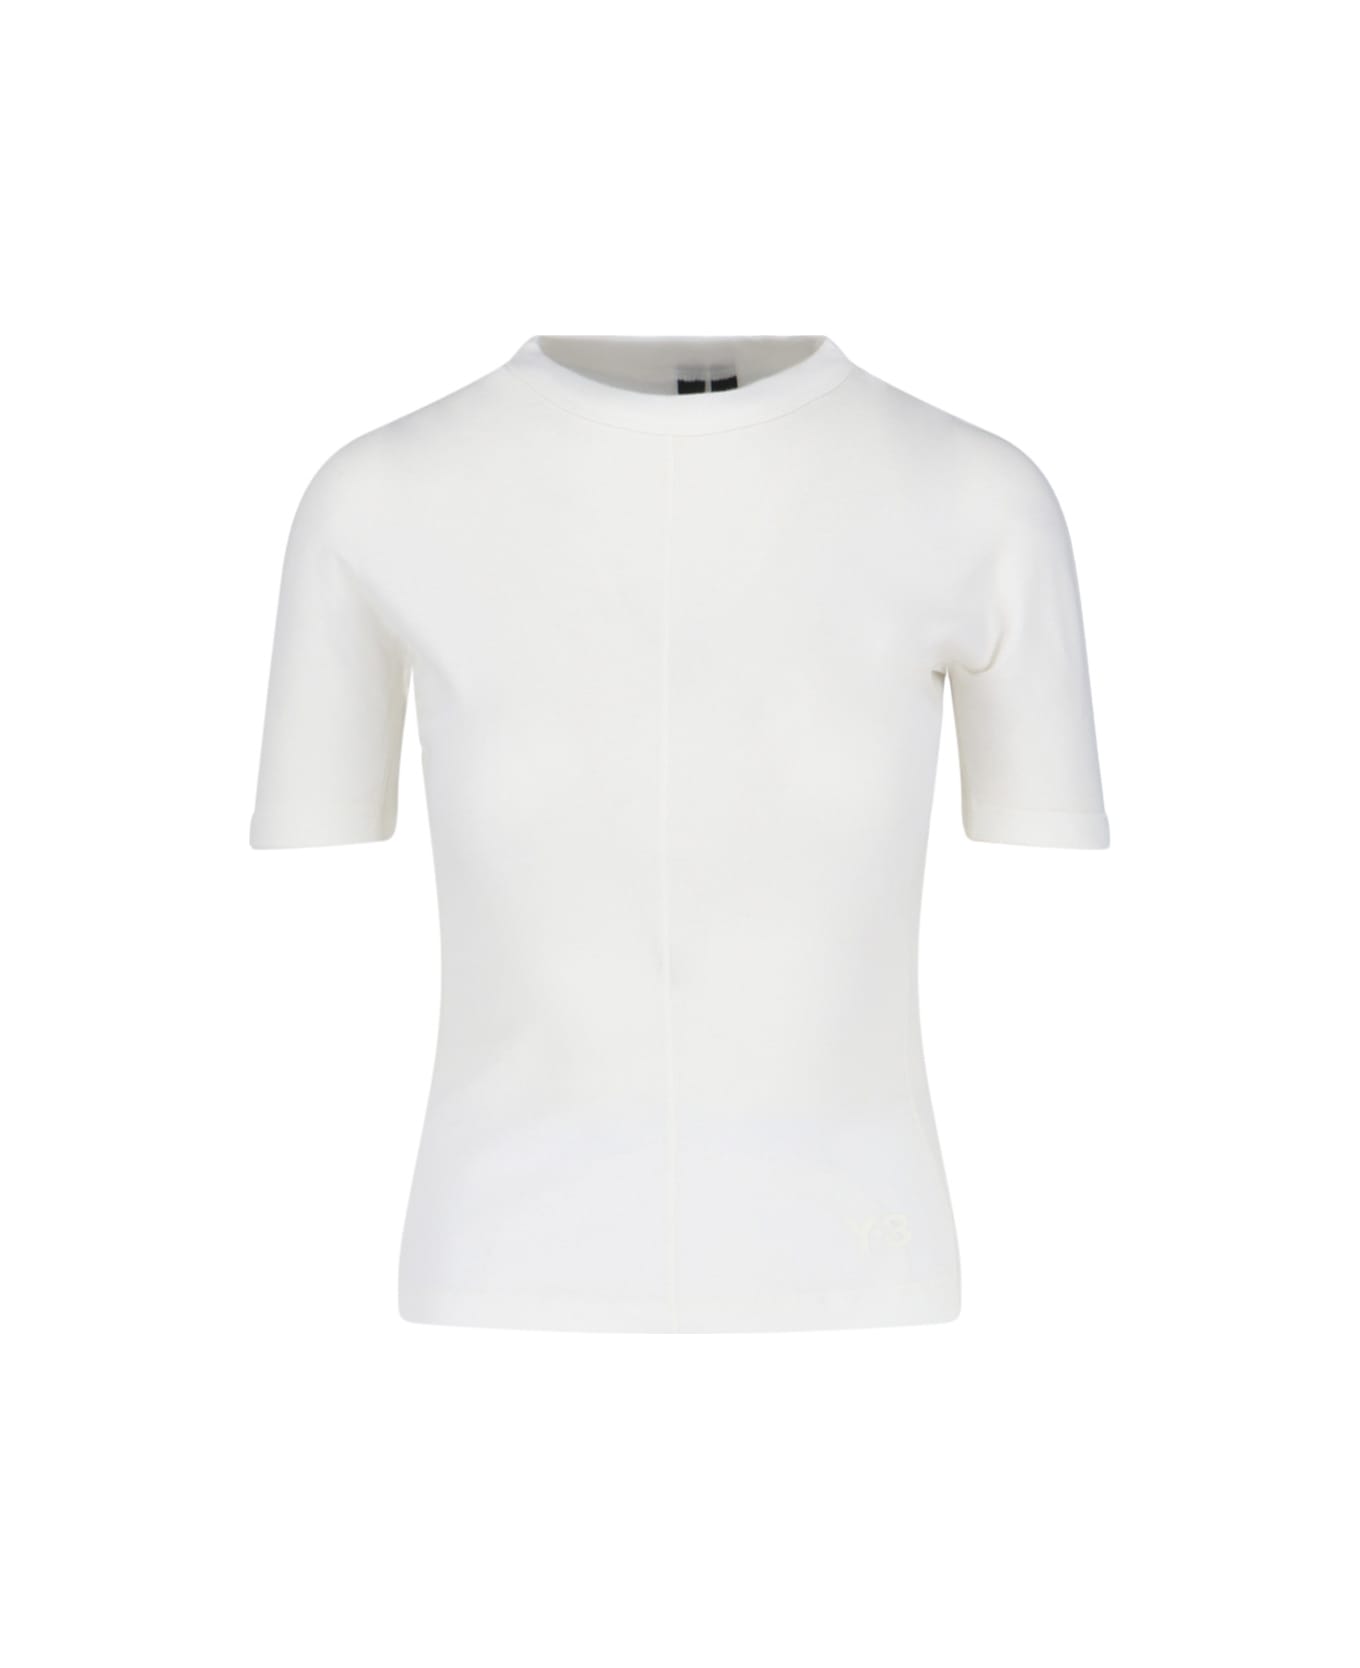 Y-3 Basic T-shirt - White Tシャツ